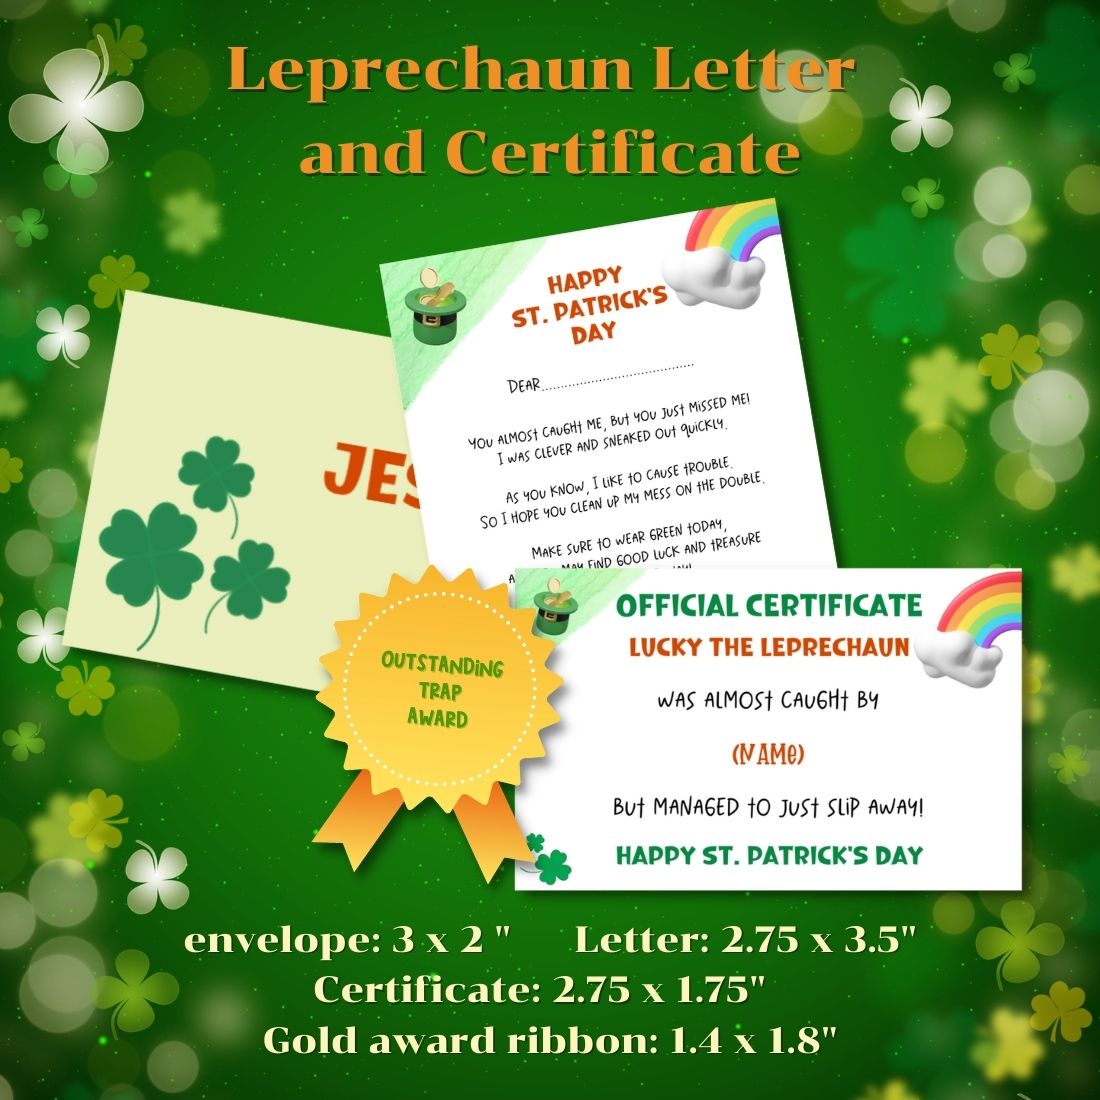 Customizable Leprechaun Letter, Trap Certificate, gold award preview image.